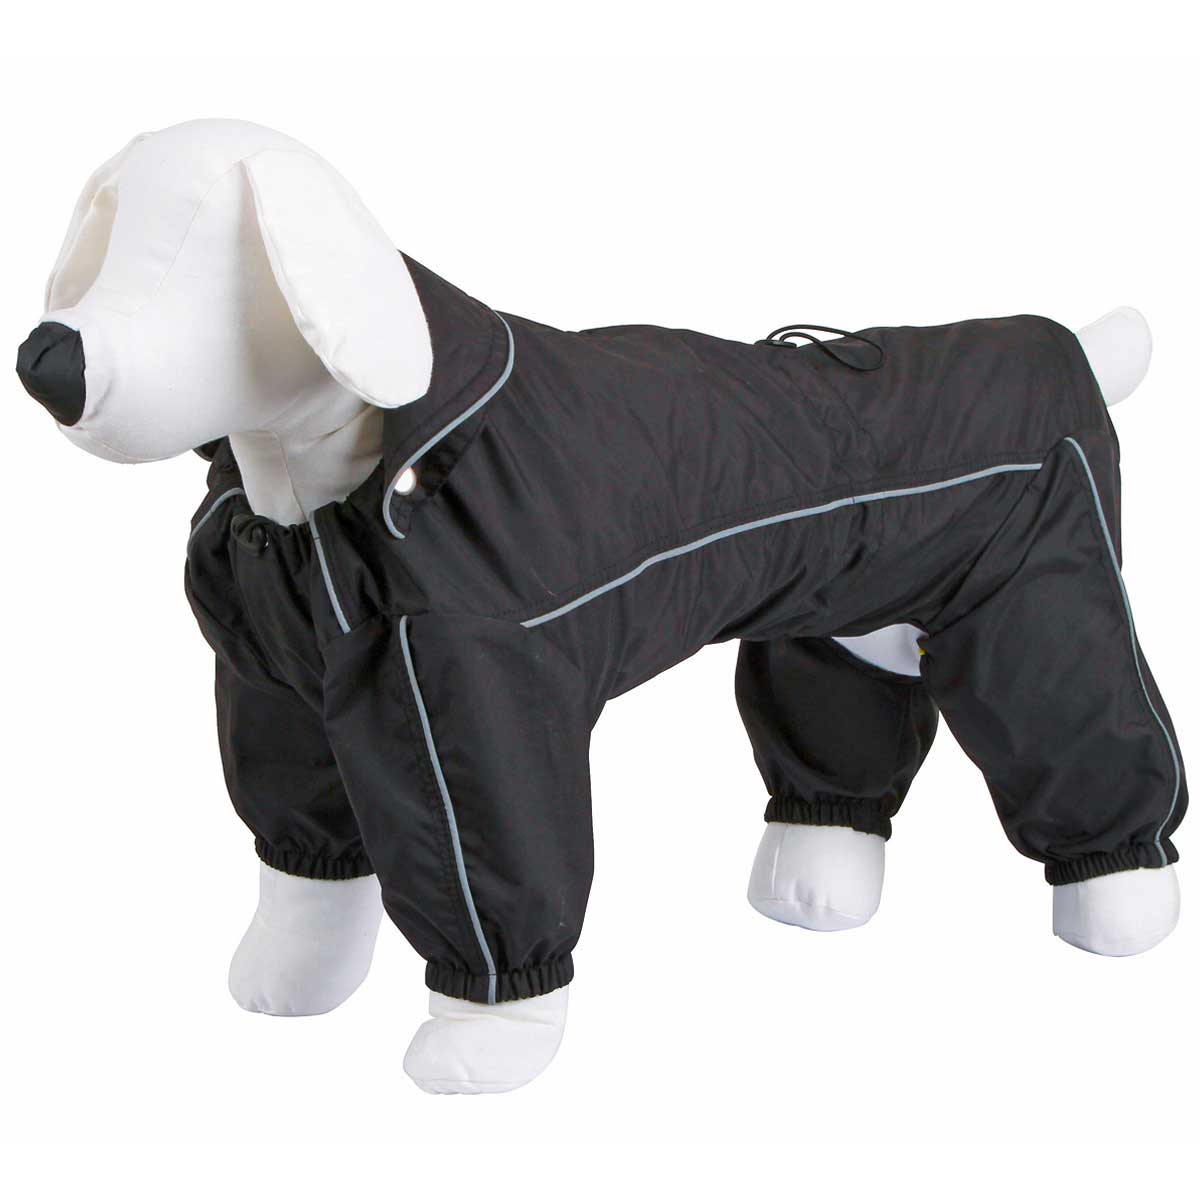 Kerbl Dog Raincoat Manchester XS